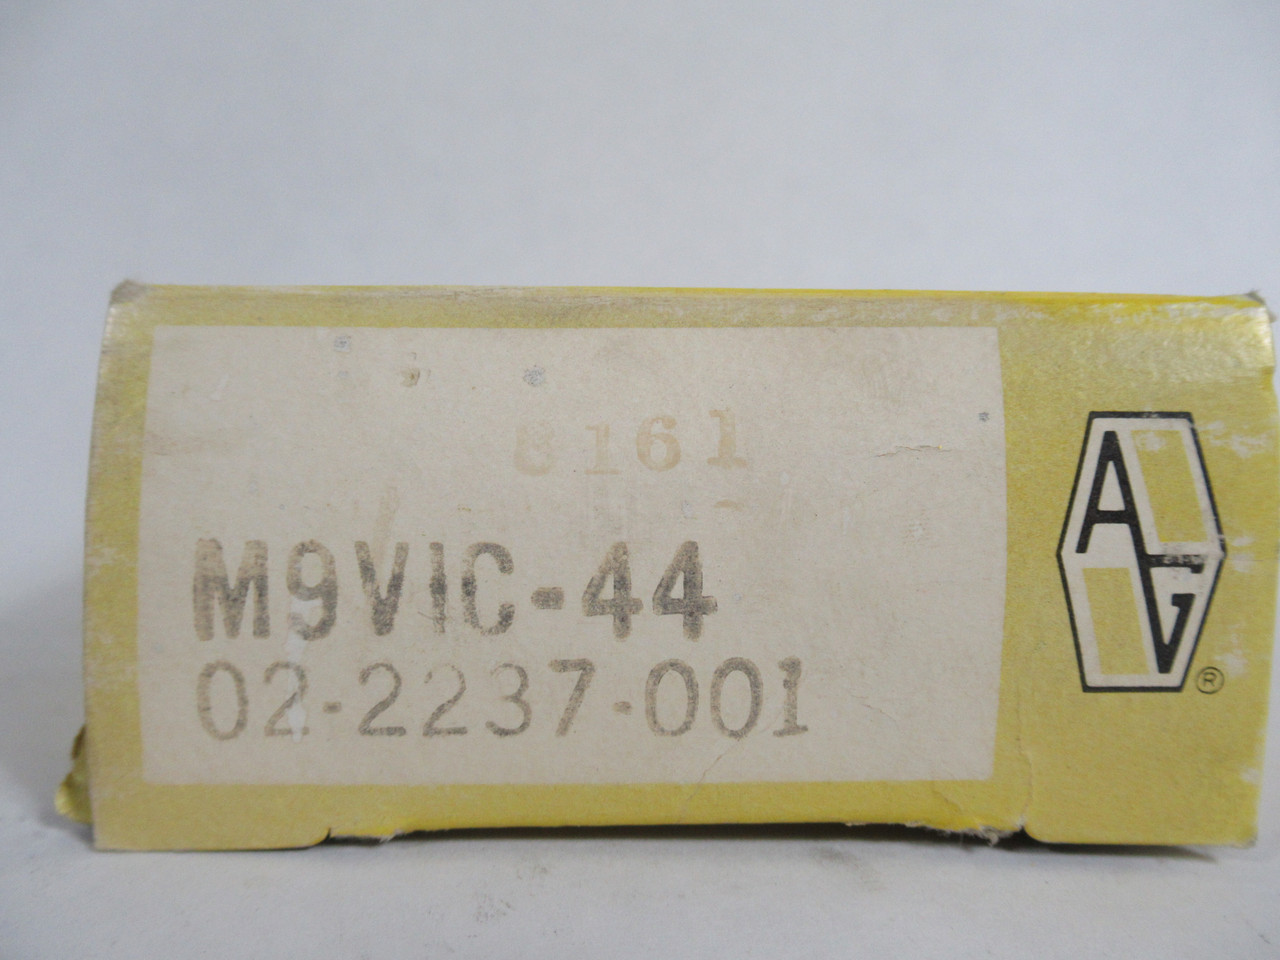 AGCO M9VIC-44-022237-001 Block&Bleed Gauge Valve 1/2"MNPT/FNPT 6000PSI@200F NEW